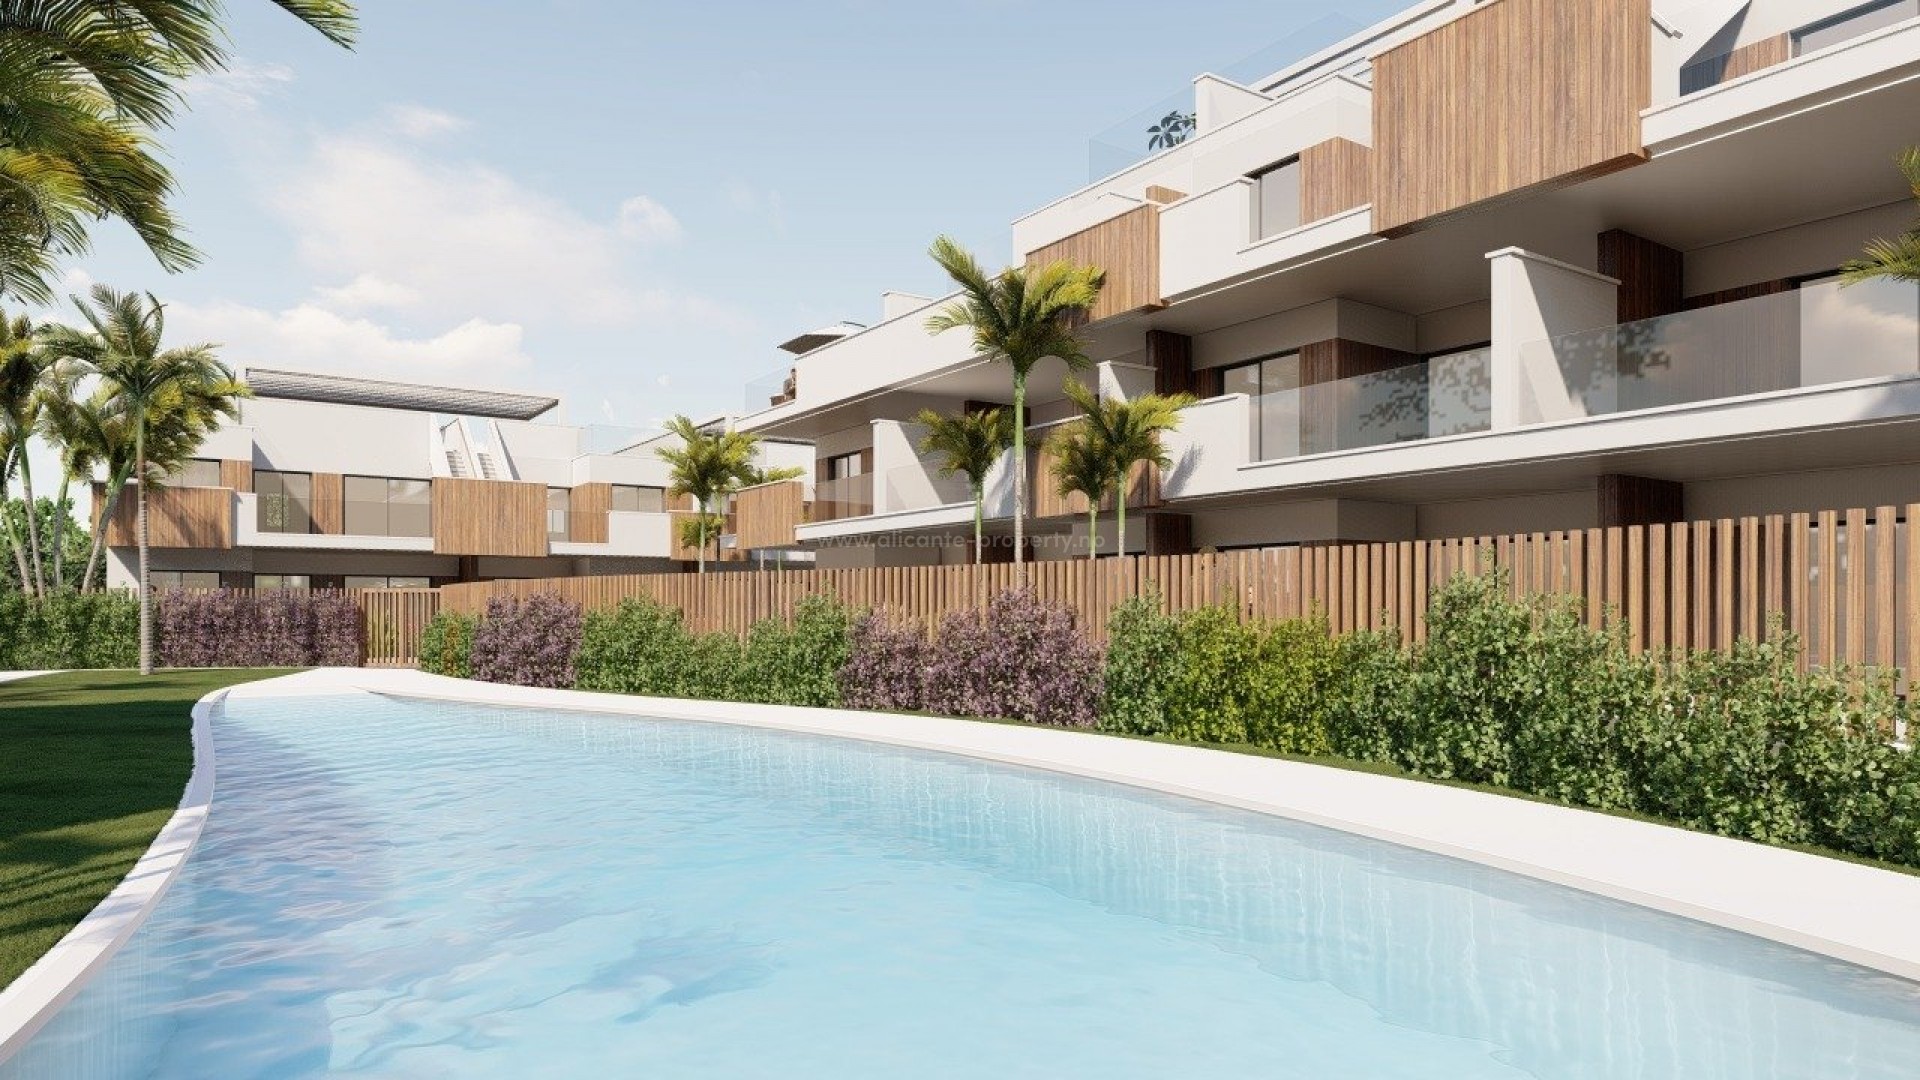 Bungalow, apartments/penthouses in Pilar de La Horadada, 2/3 bedrooms, terraces, penthouses w/solarium, shared garden with pool and gym